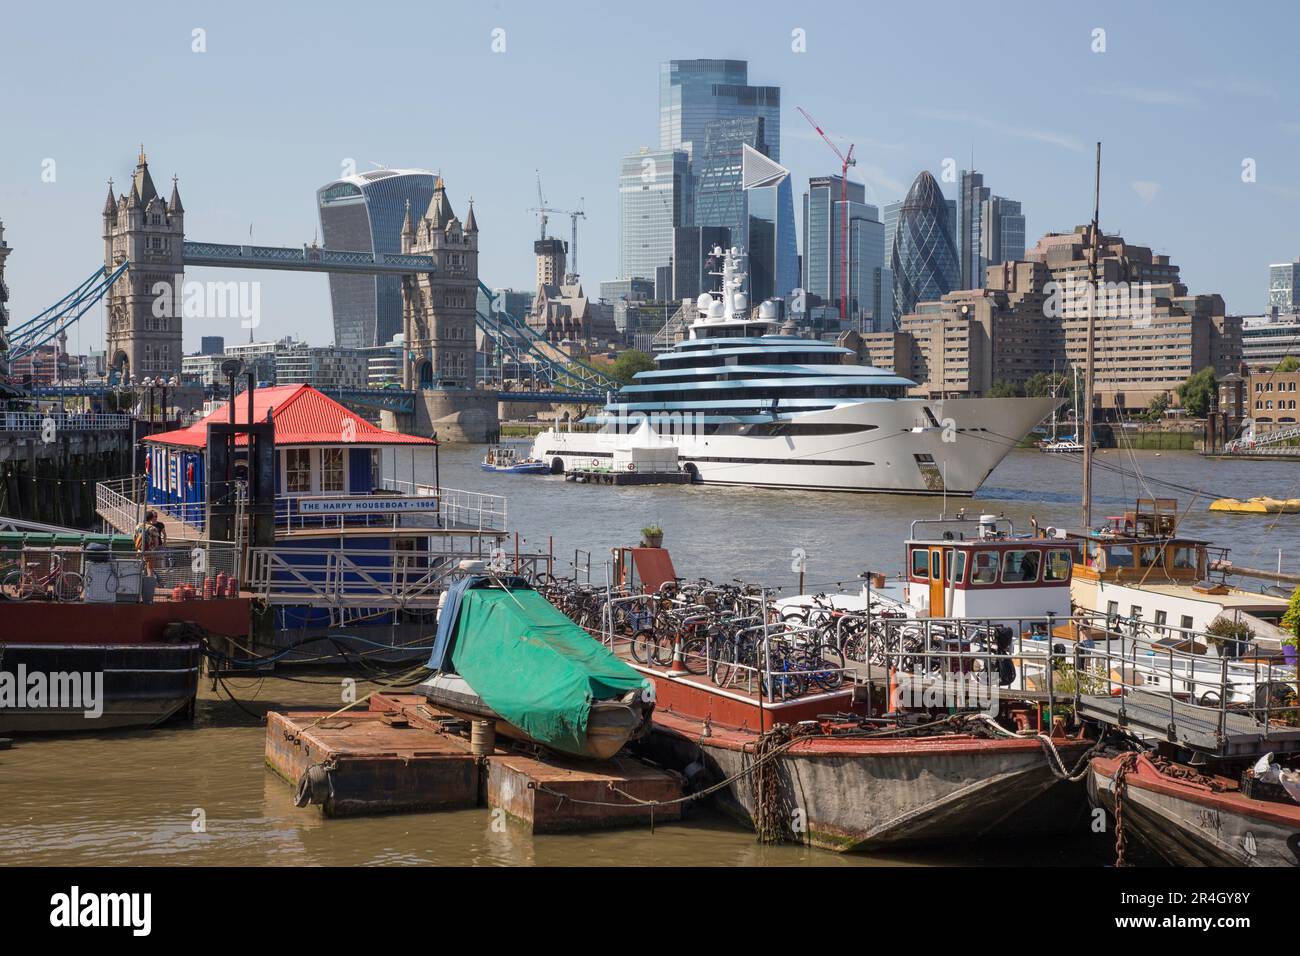 Super Yacht Kaos moored at Tower Bridge London Stock Photo